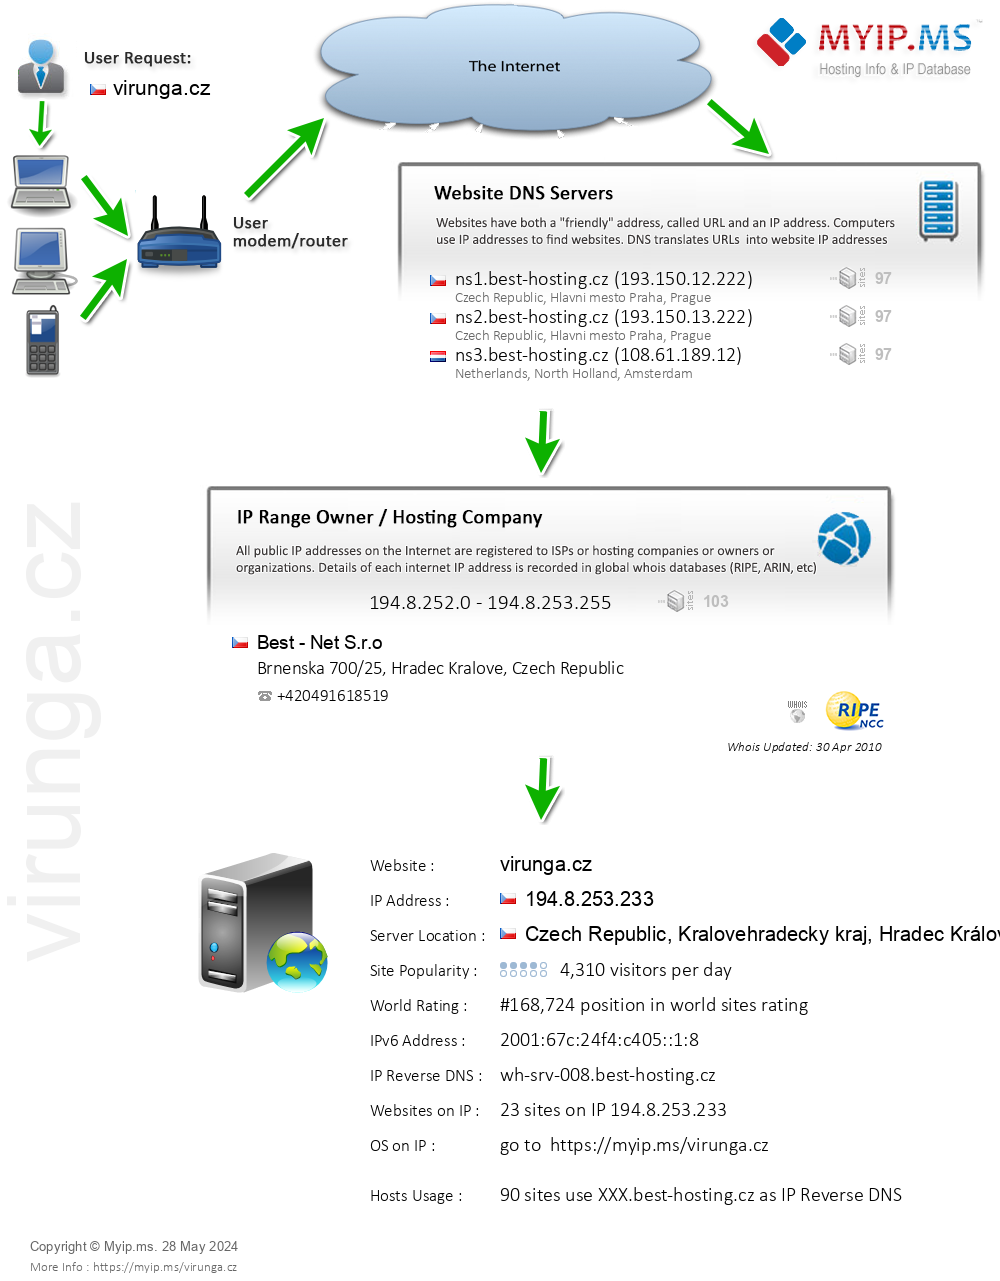 Virunga.cz - Website Hosting Visual IP Diagram